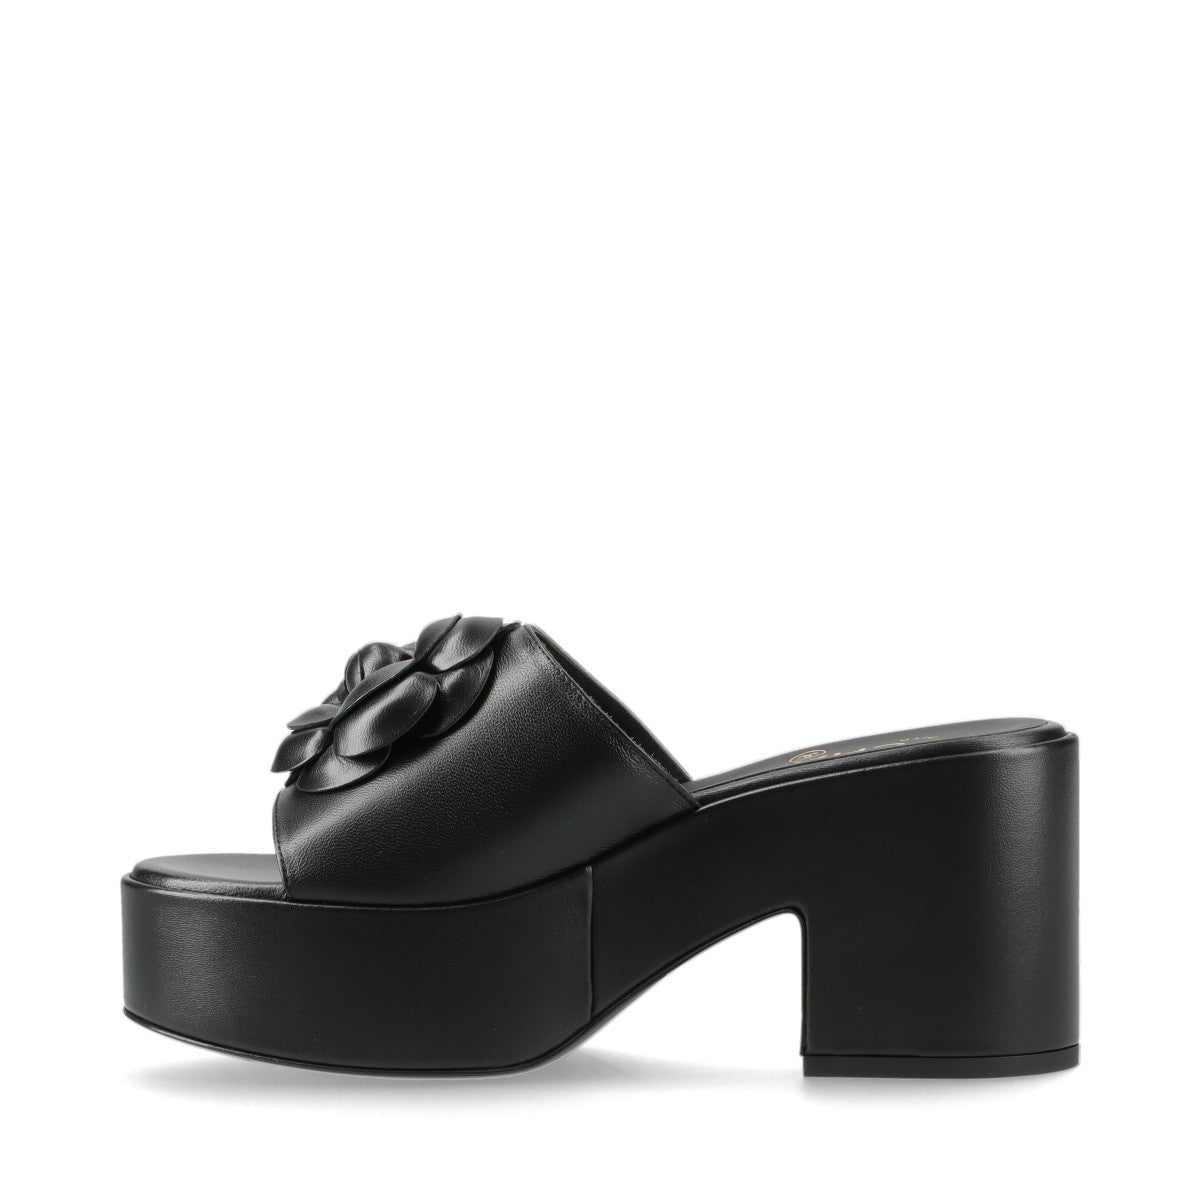 Chanel Coco Mark Camelia 24P Leather Sandals EU35 1/2C Ladies' Black G45498 Box Bag Included